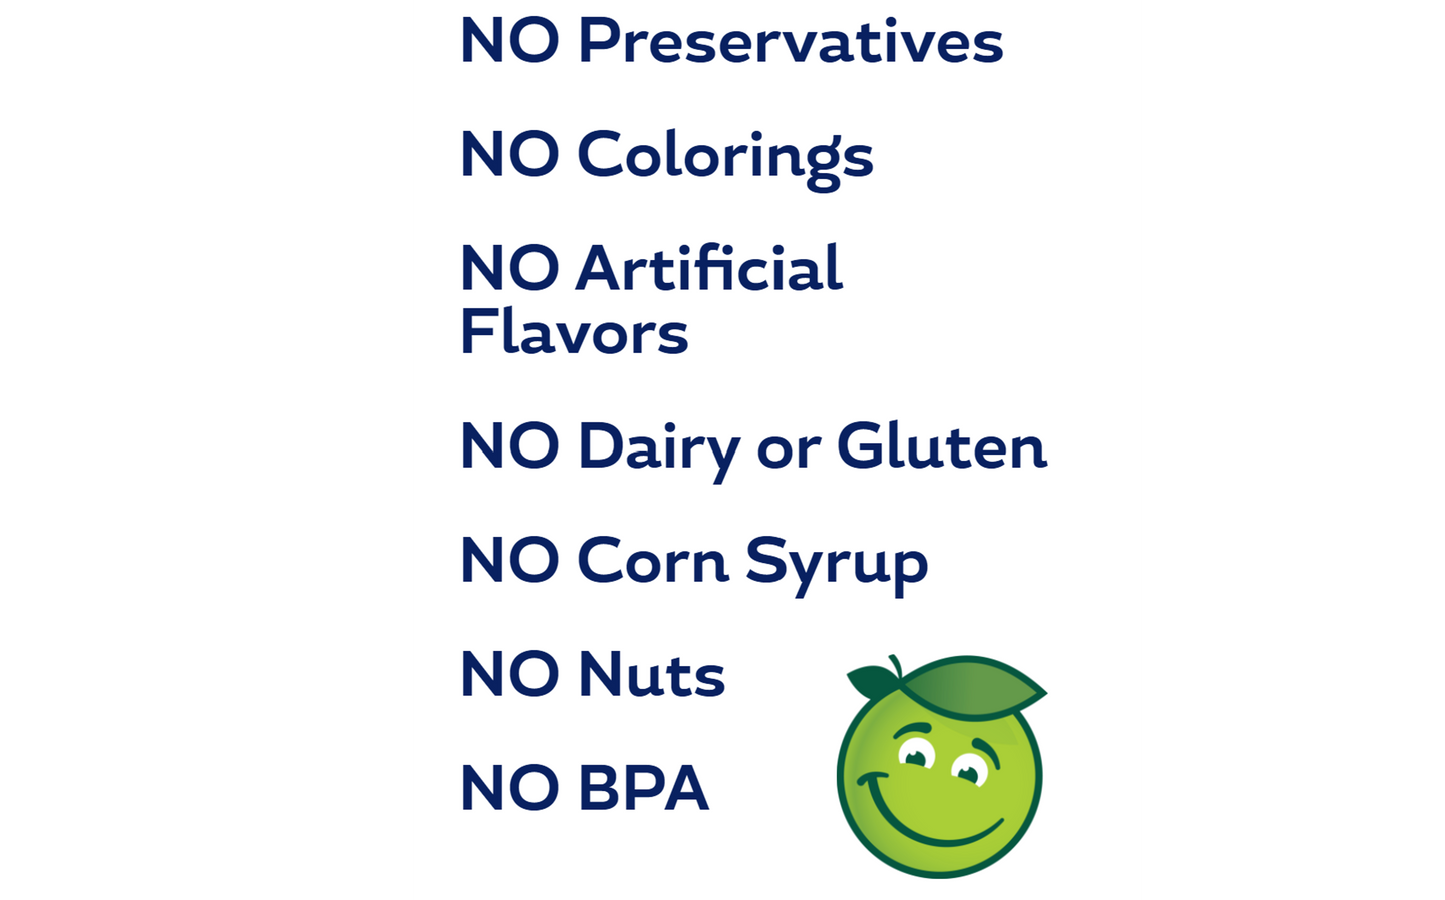 Buddy Fruits Banana & Apple fruit pouch has no preservatives, no colorings, no artificial flavors, no dairy, no gluten, no corn syrup, no nuts, & no BPA.